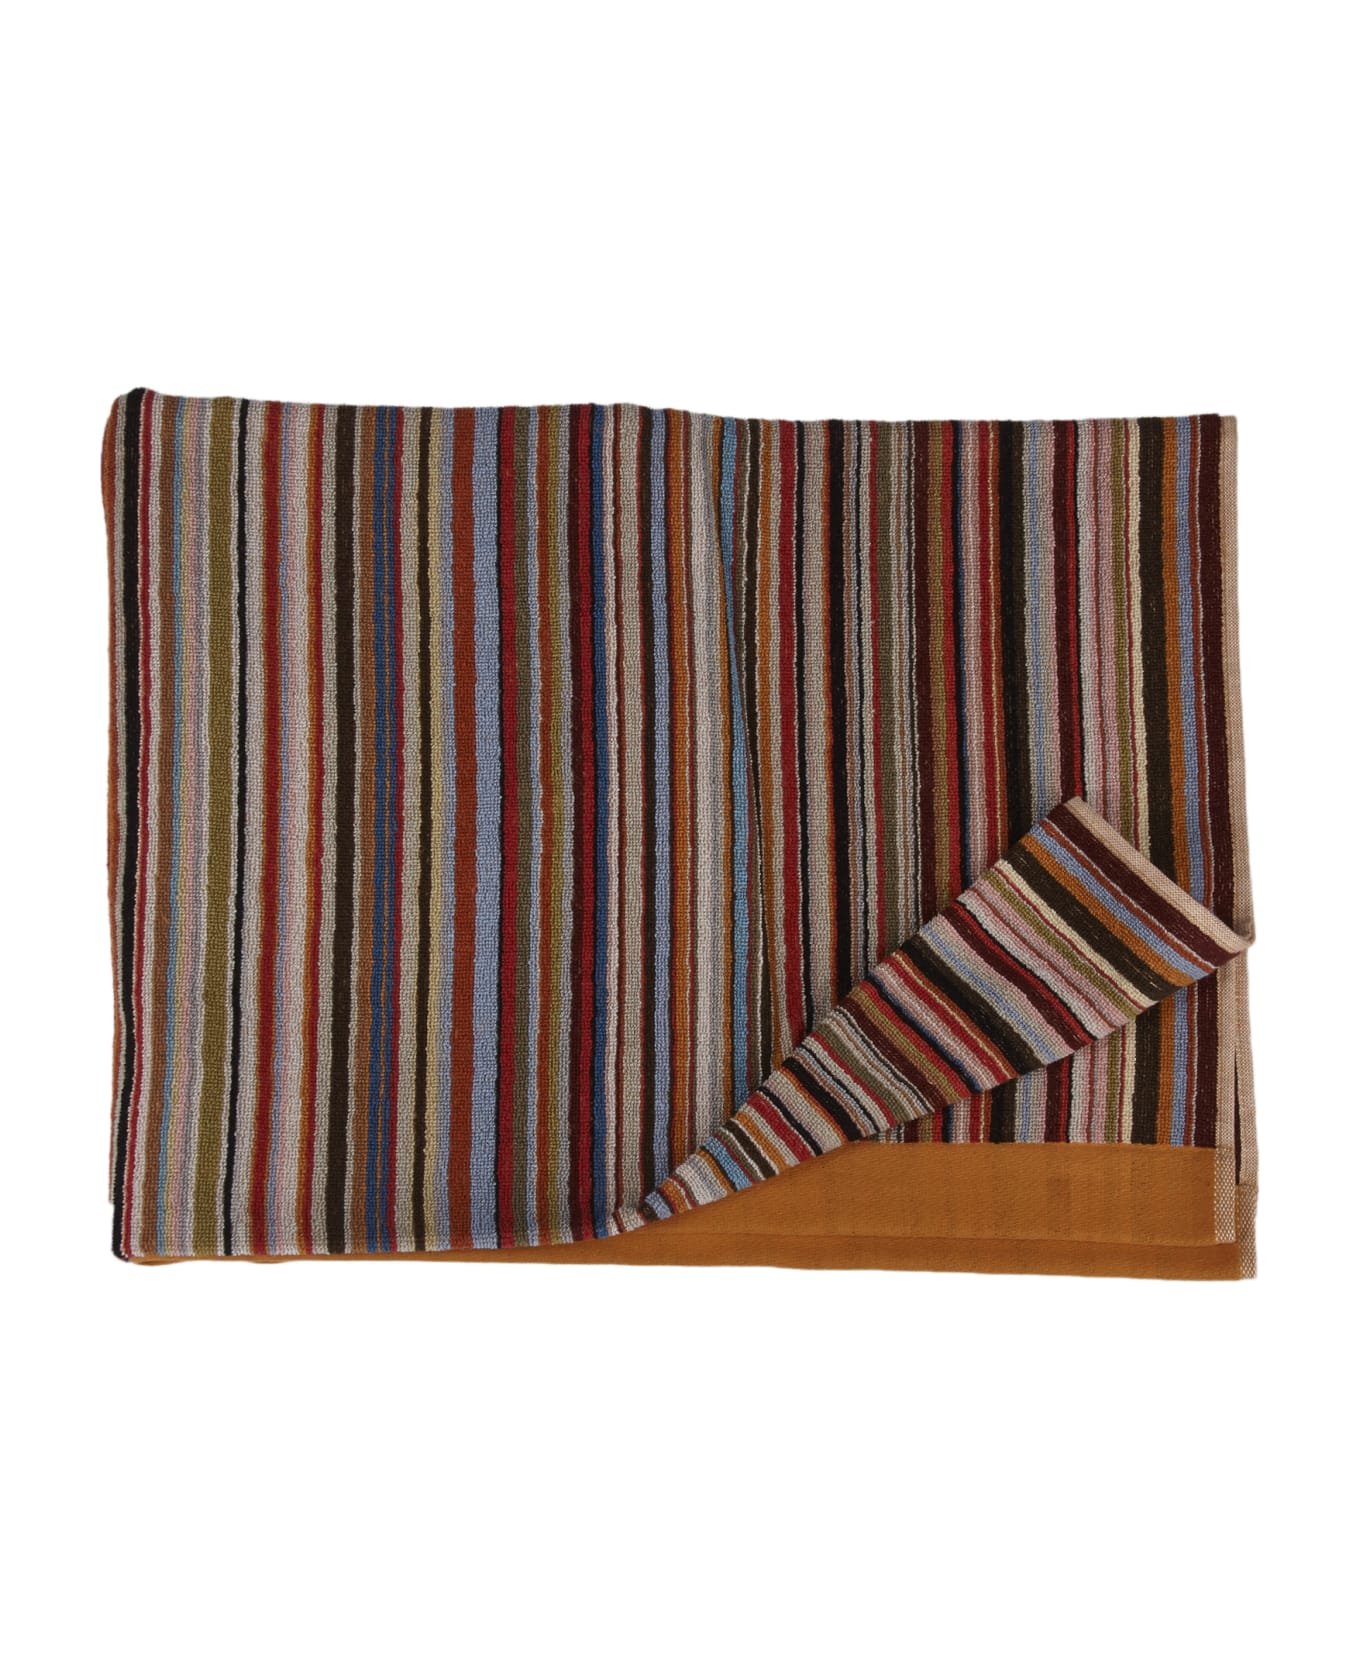 Paul Smith Towel Mstrp Large - Multicolor